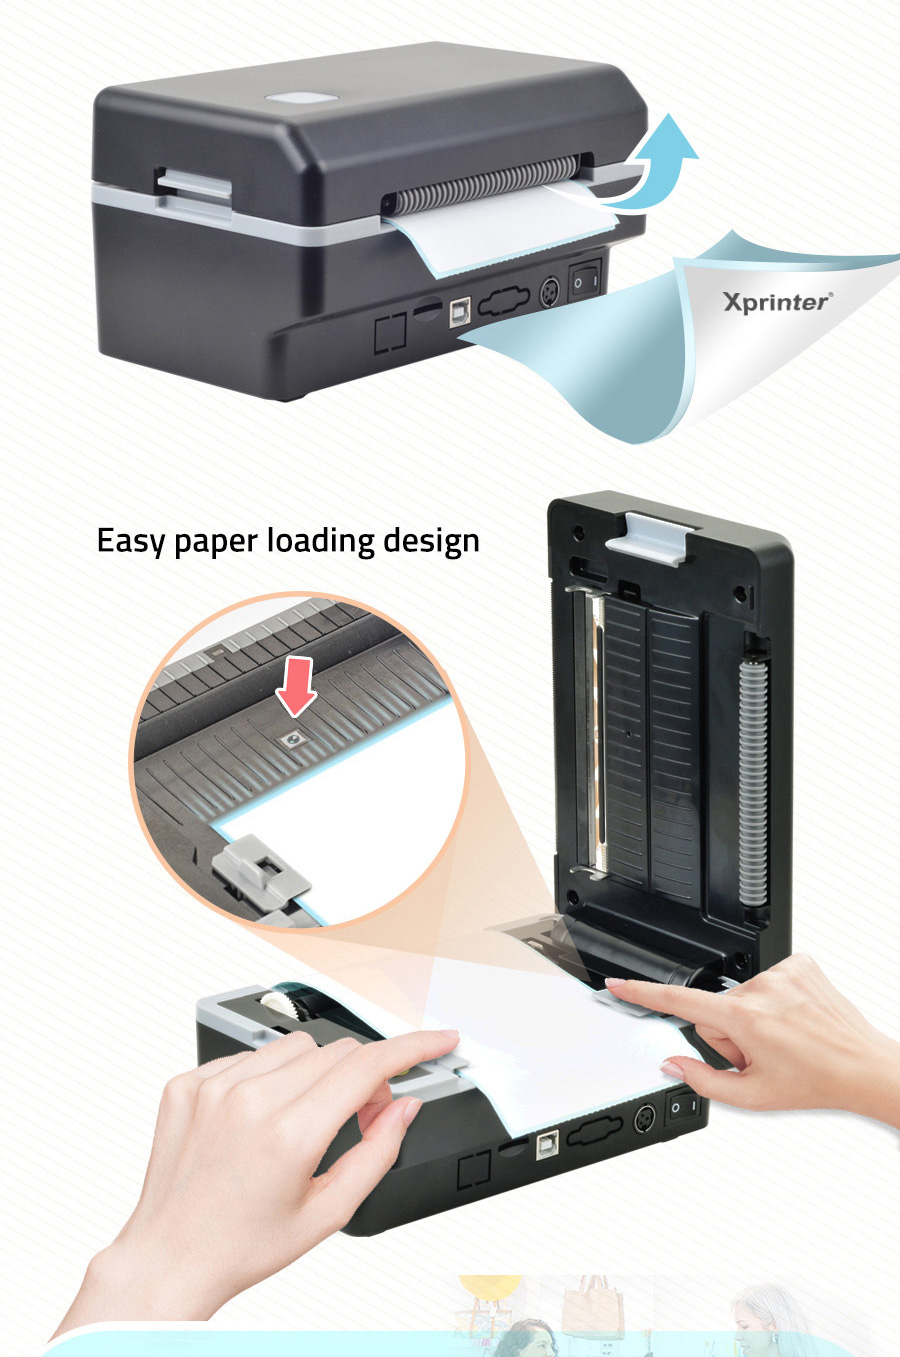 Xprinter custom thermal printer from China for post-4